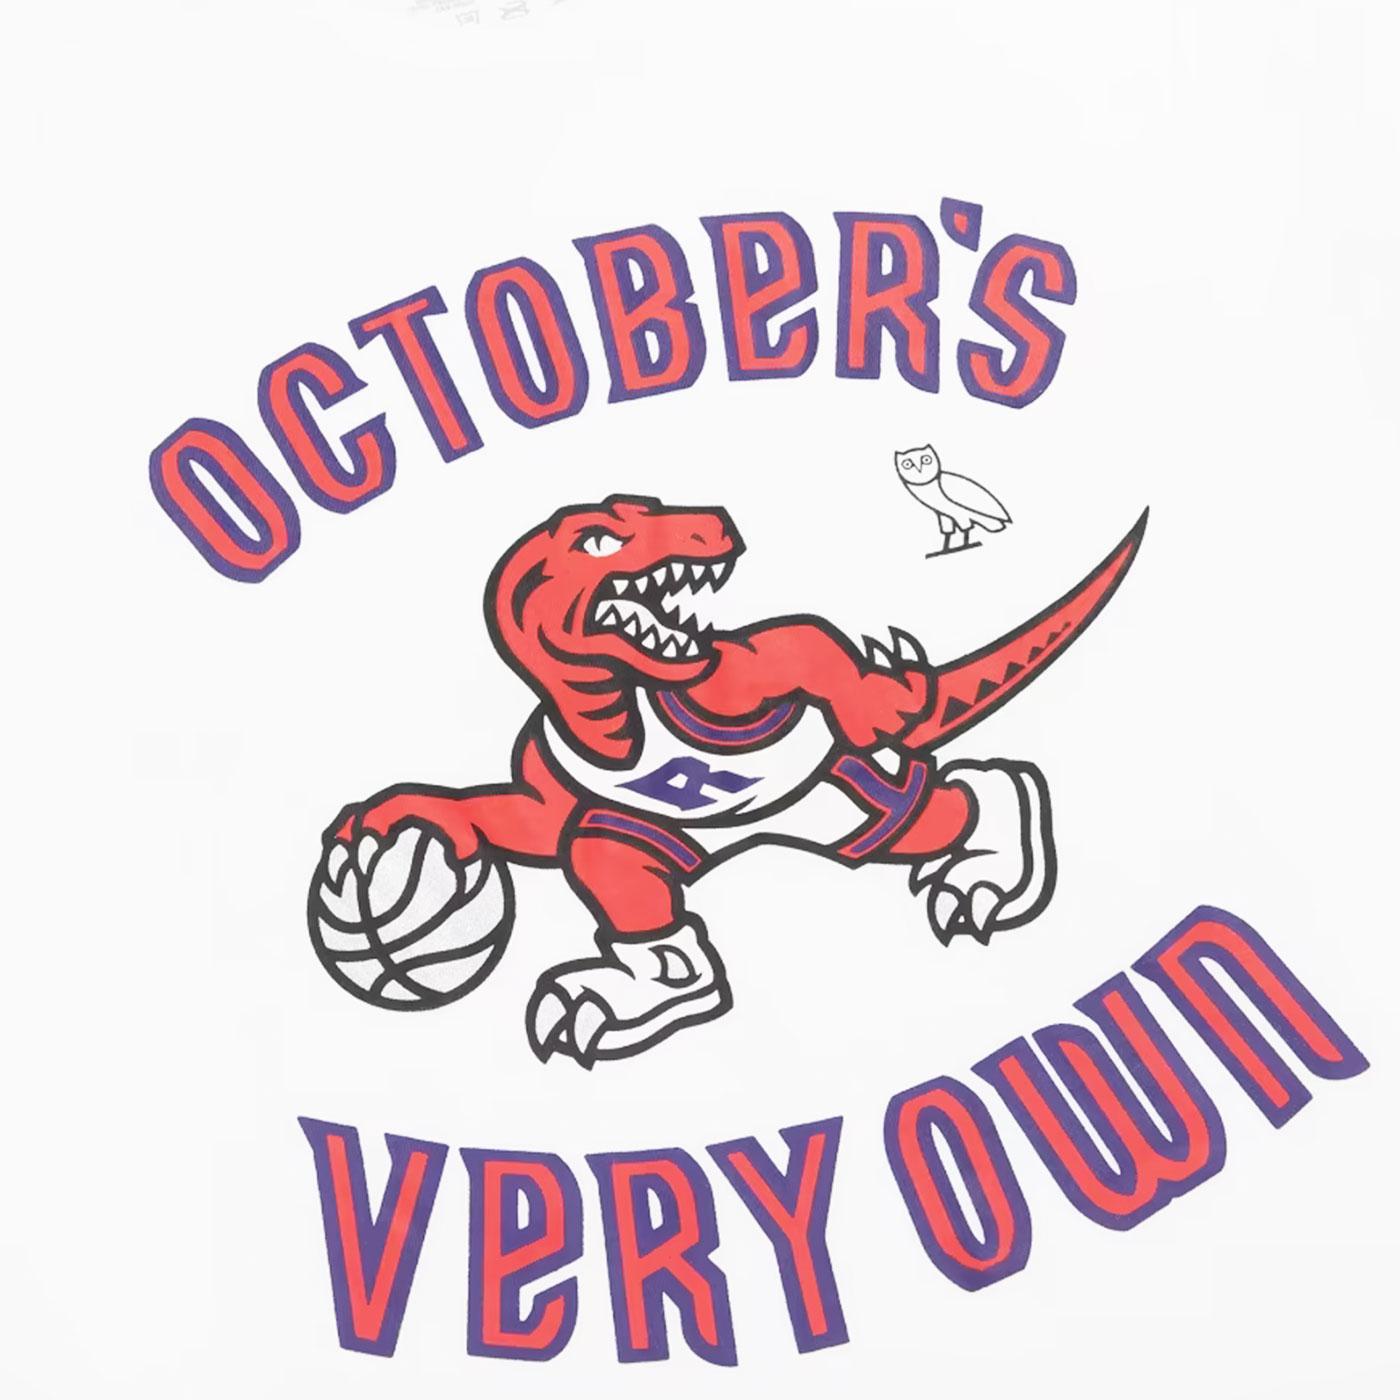 OVO / Mitchell & Ness '95 Raptors OG Owl T-Shirt (Red)